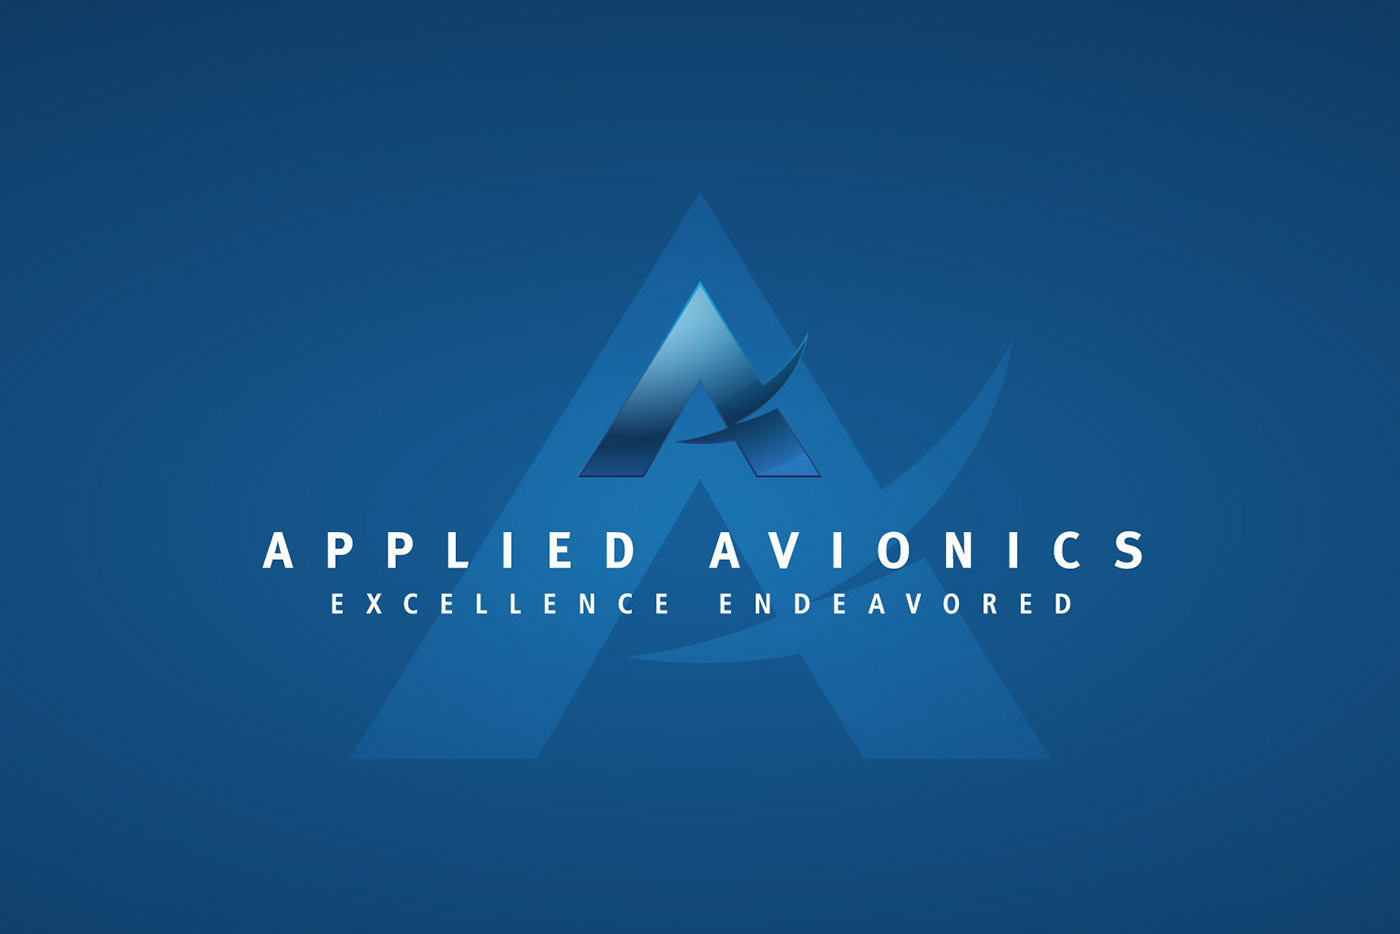 Applied Avionics, visual identity, logo, business card, brochure, flyer for an aviation company.